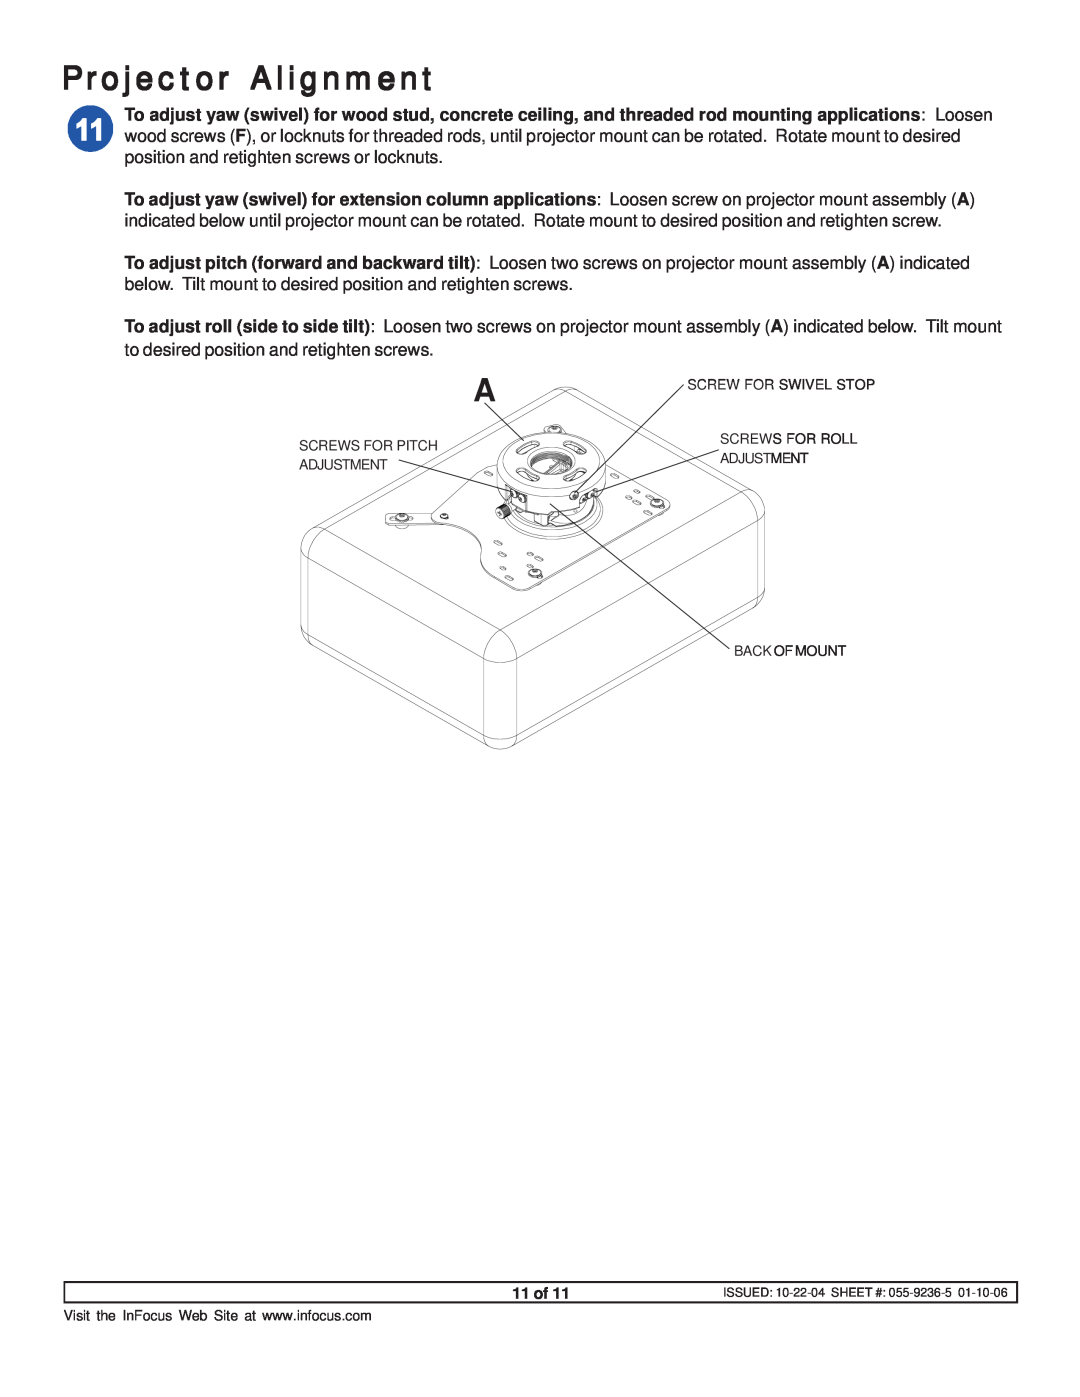 InFocus SP-CEIL-UNIV instruction sheet Projector Alignment, 11 of 